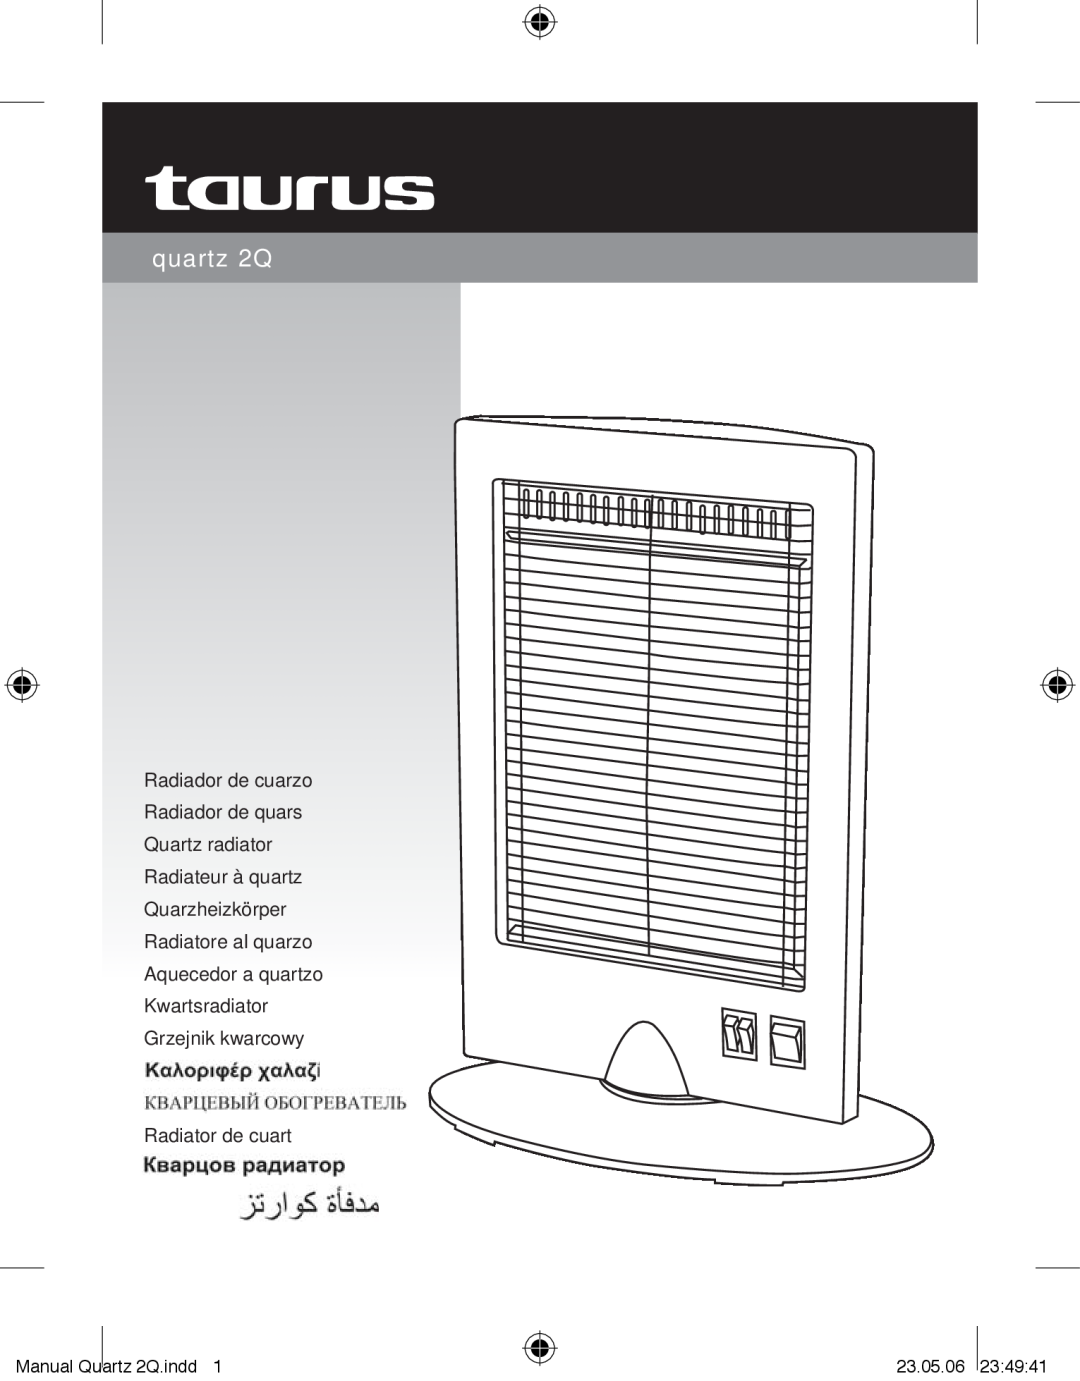 Taurus Group QUARTZ2Q manual quartz 2Q, Radiator de cuart, Manual Quartz 2Q.indd, 23.05.06 